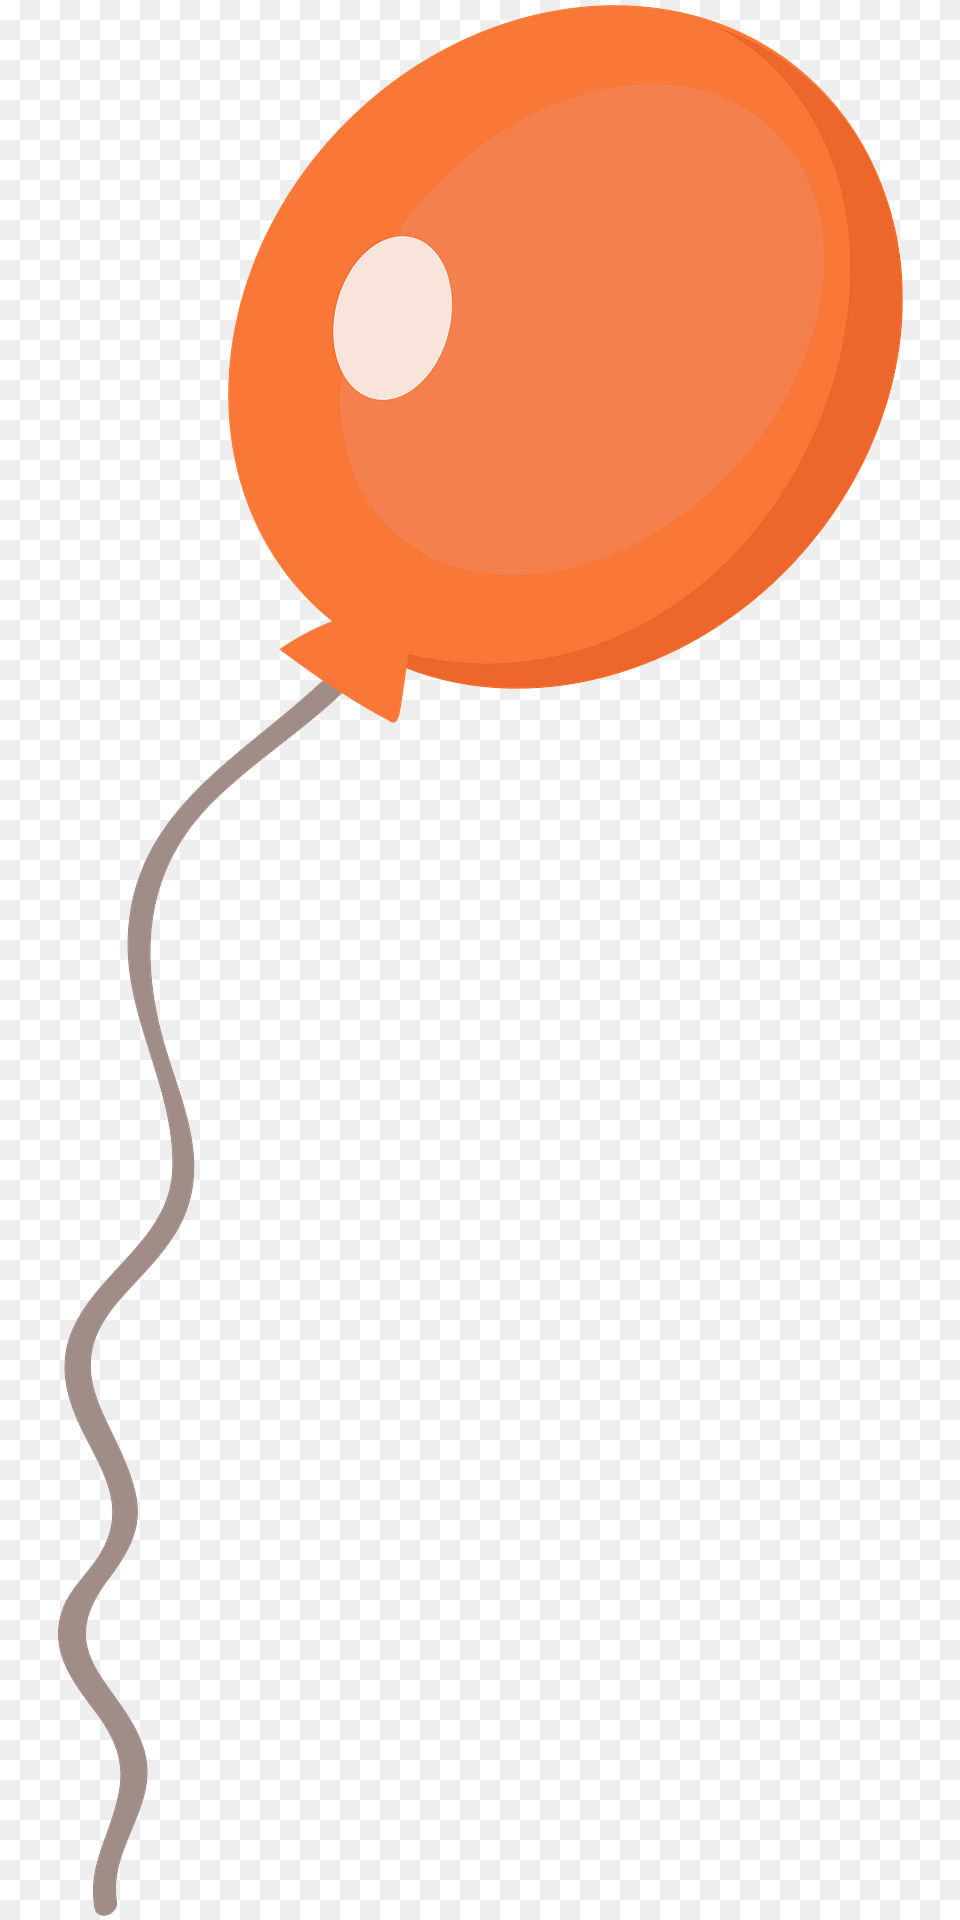 Orange Balloon Clipart Png Image